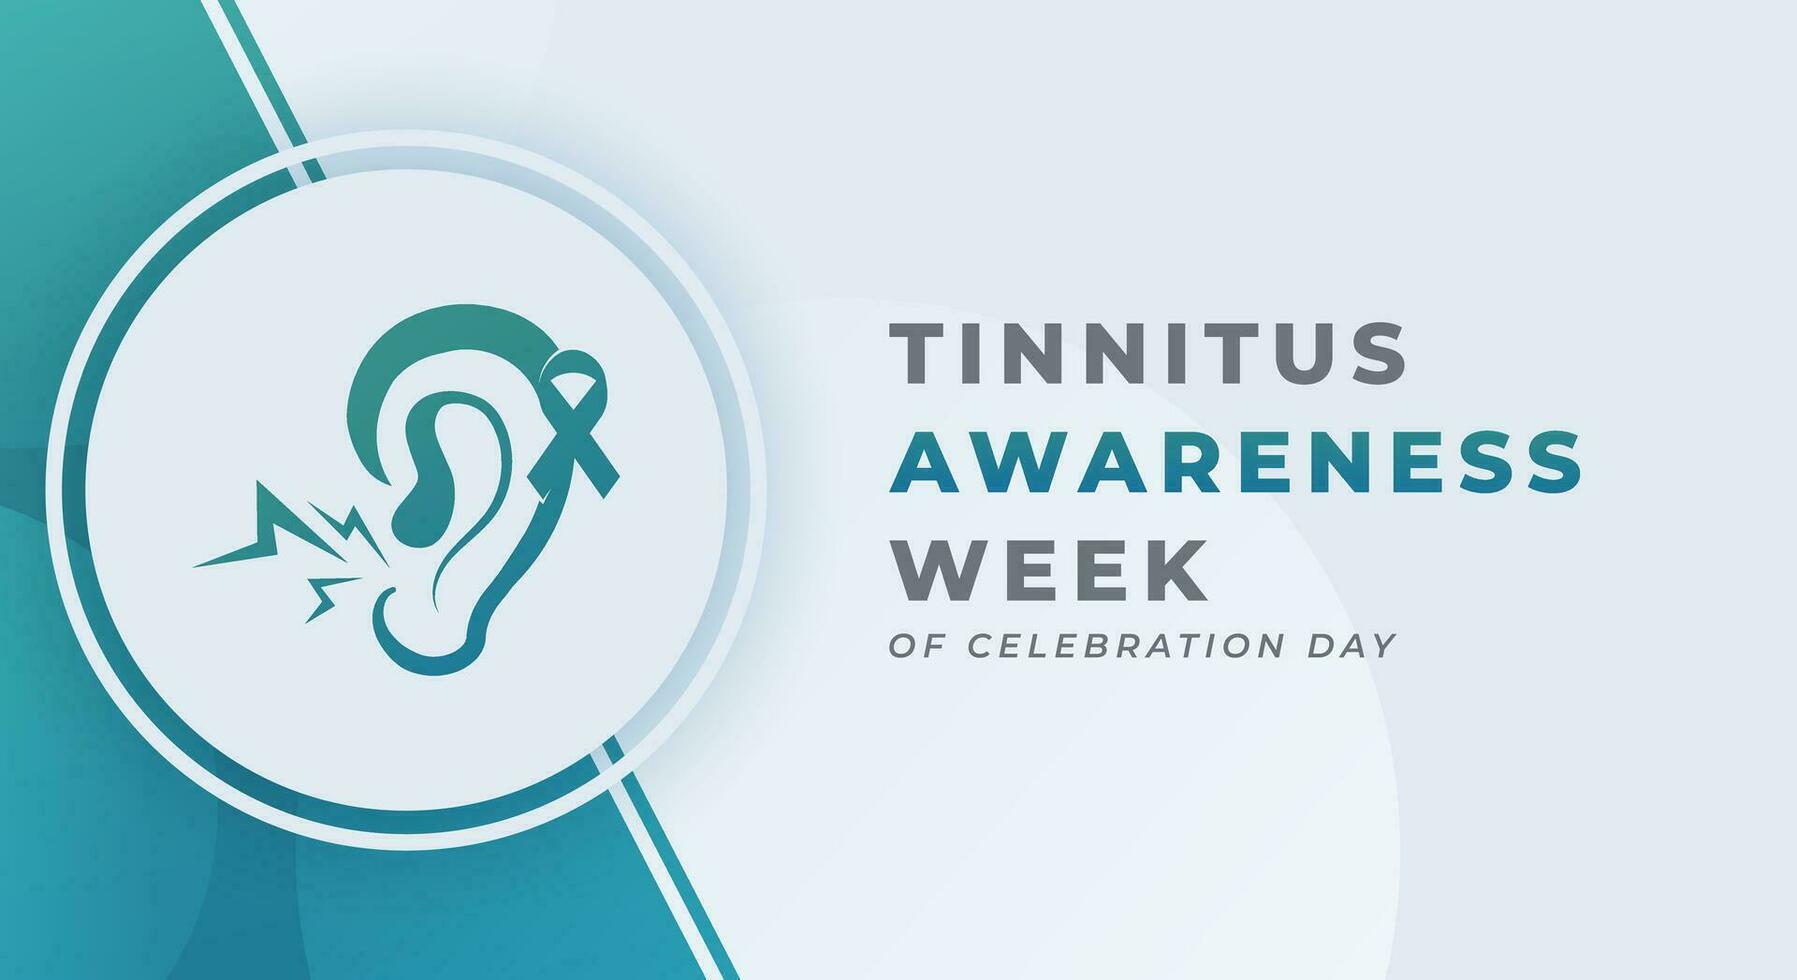 Tinnitus Awareness Week Celebration Vector Design Illustration for Background, Poster, Banner, Advertising, Greeting Card